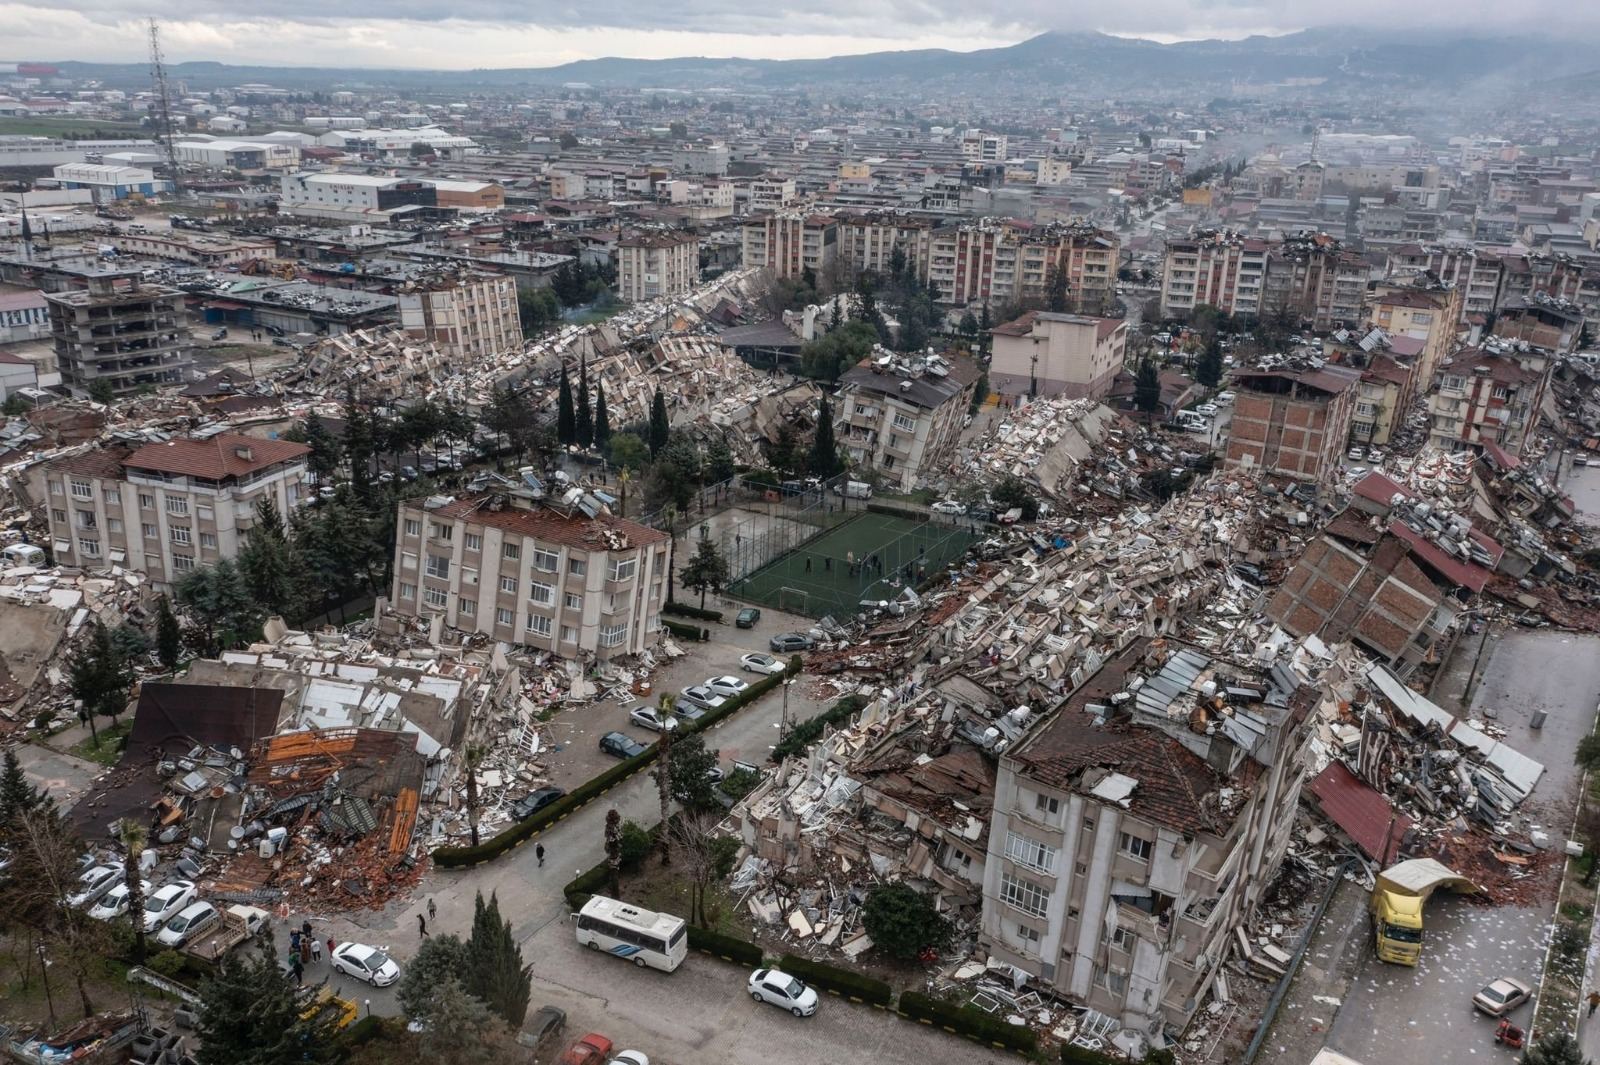 Türkiye creates shelters for earthquake victims